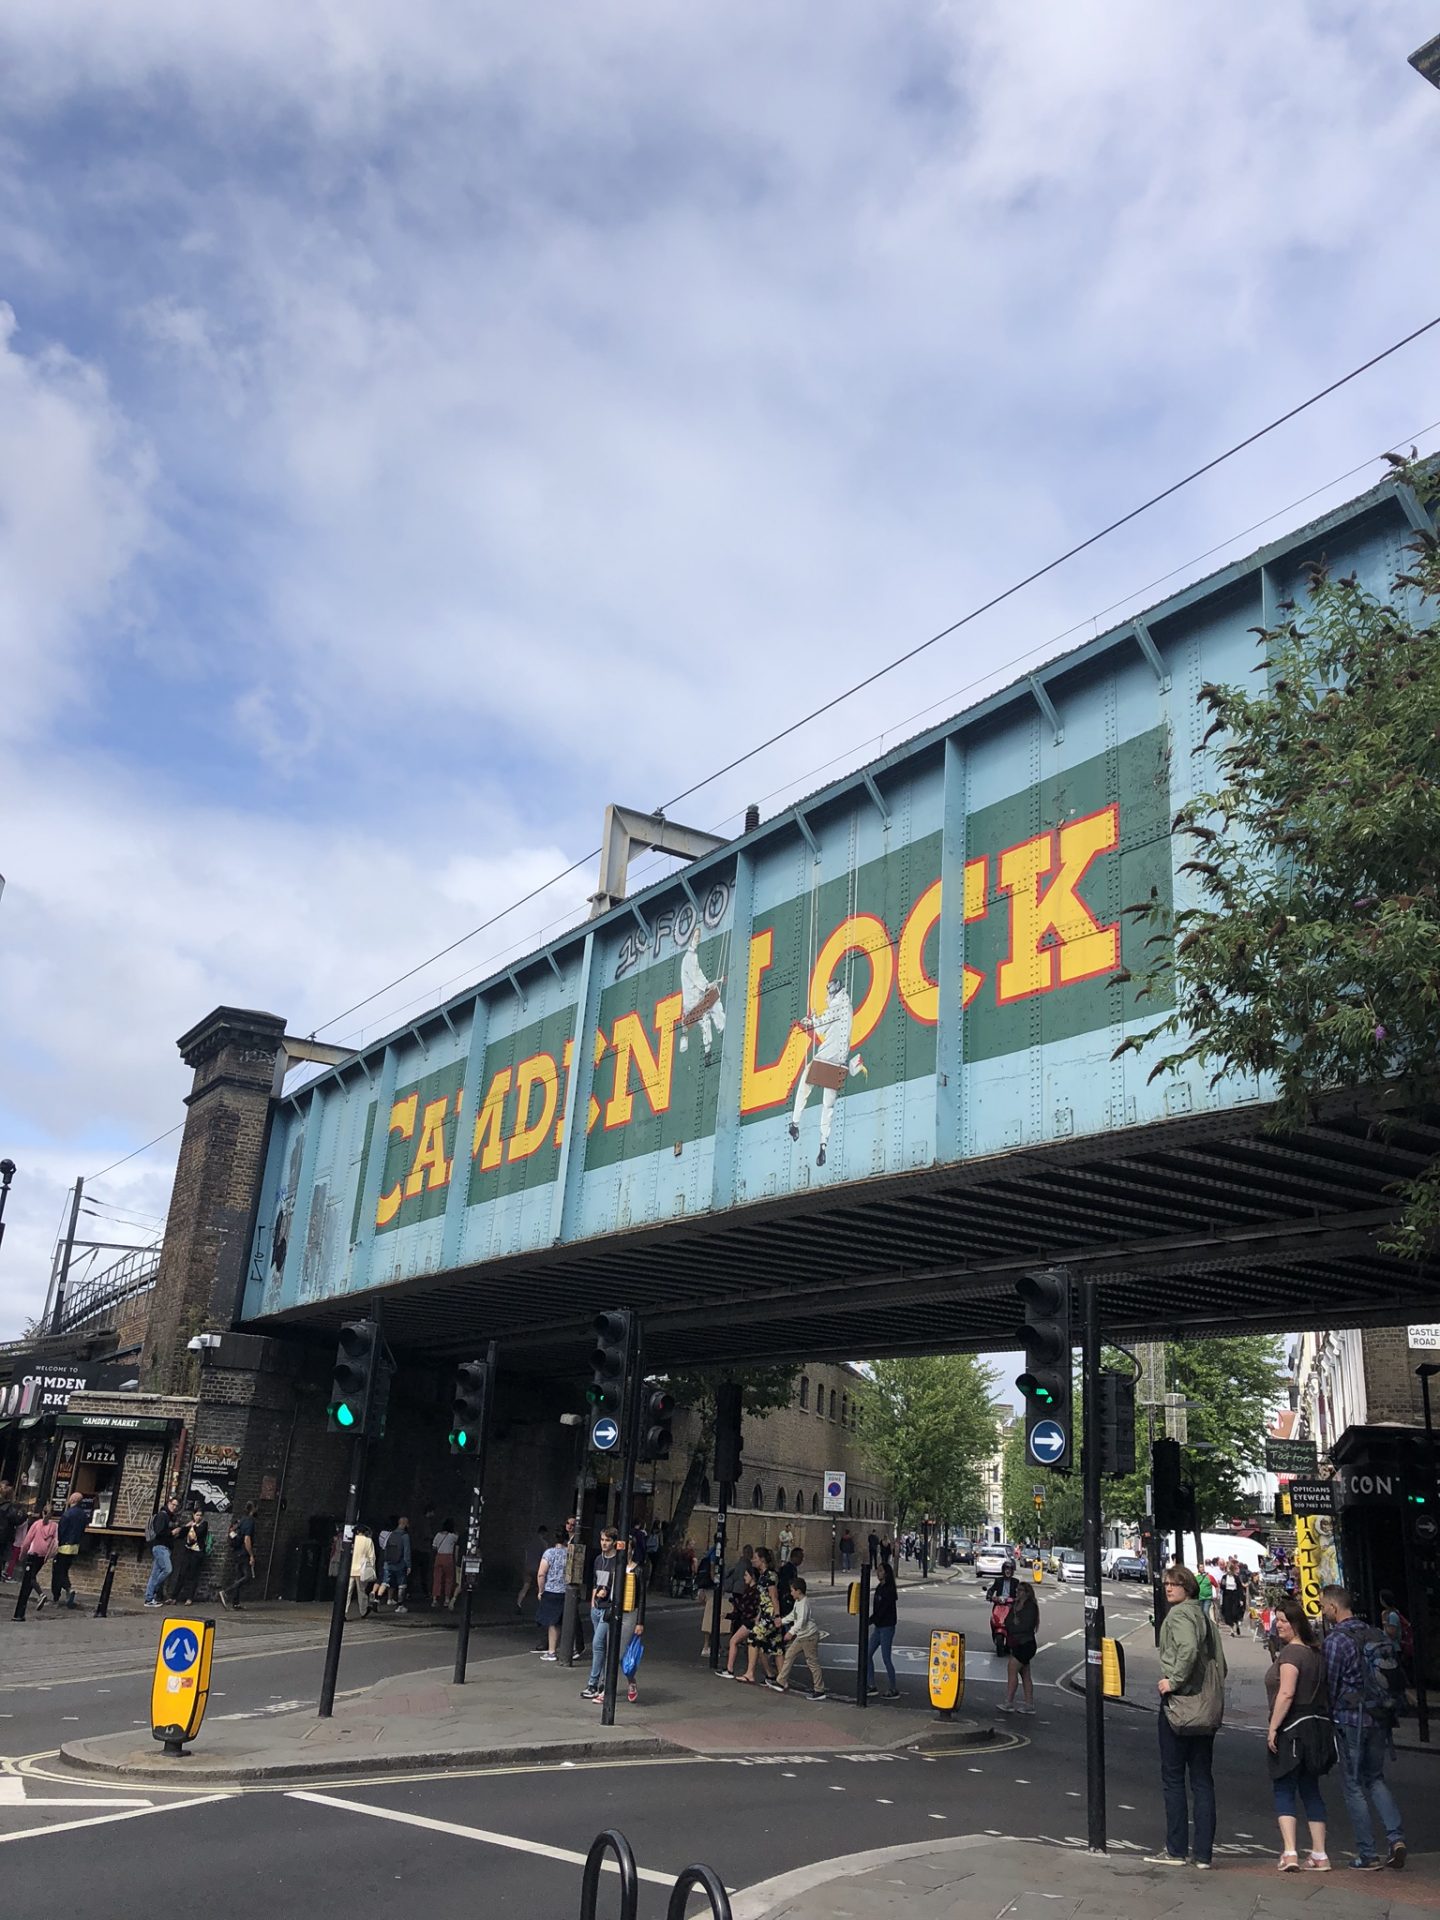 Camden Lock, London